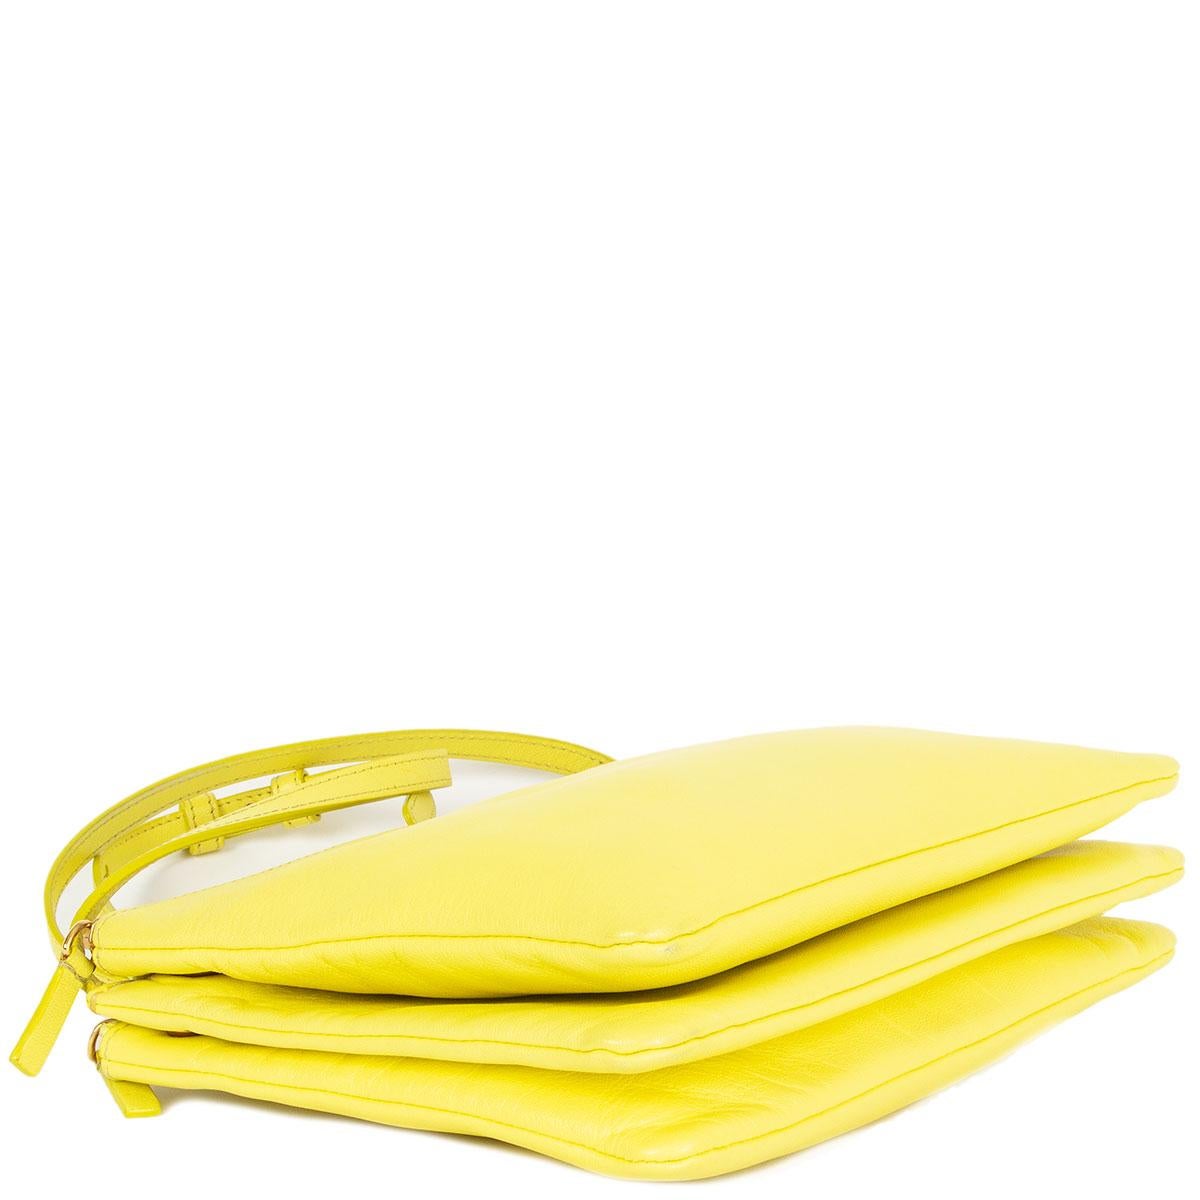 yellow crossbody bag